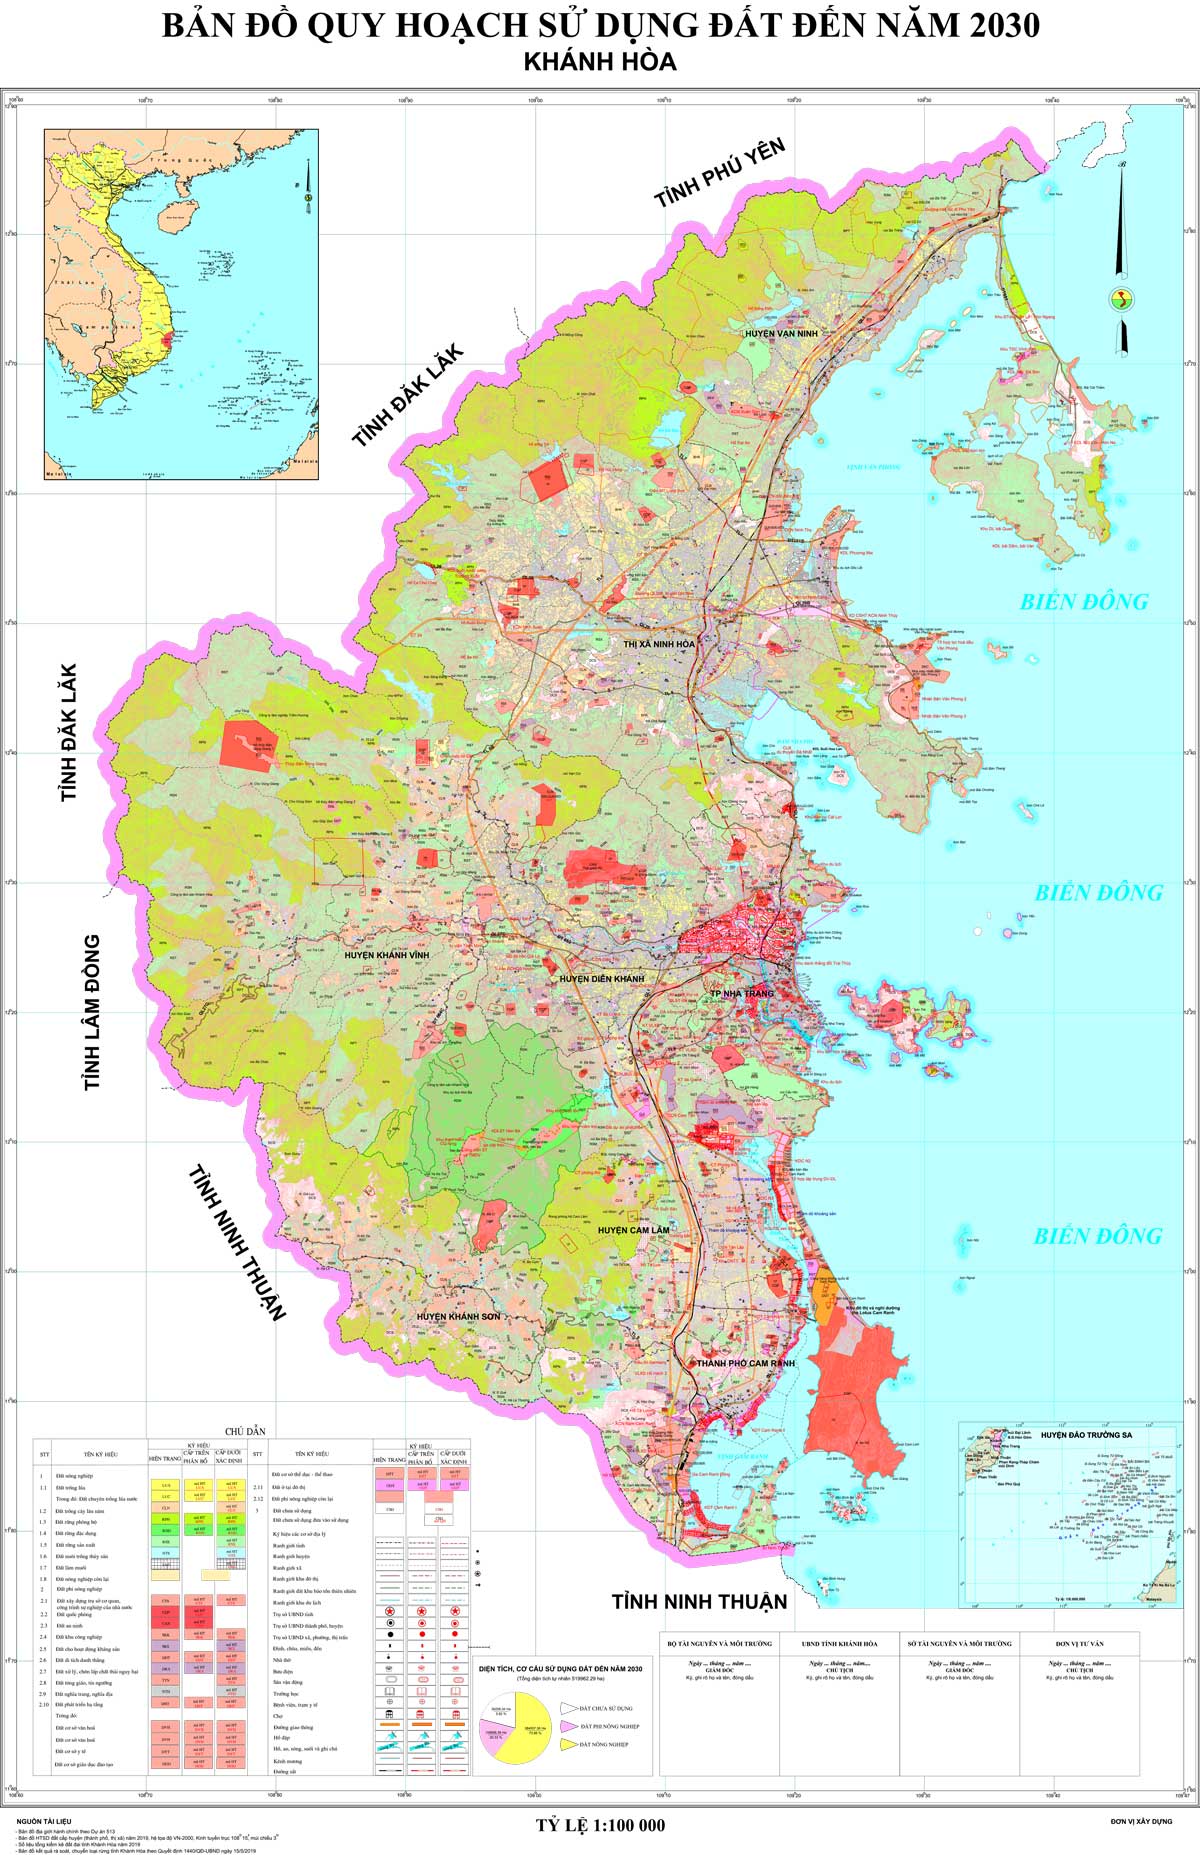 Bản đồ phương án QHSDĐ tỉnh khánh hòa đến năm 2030